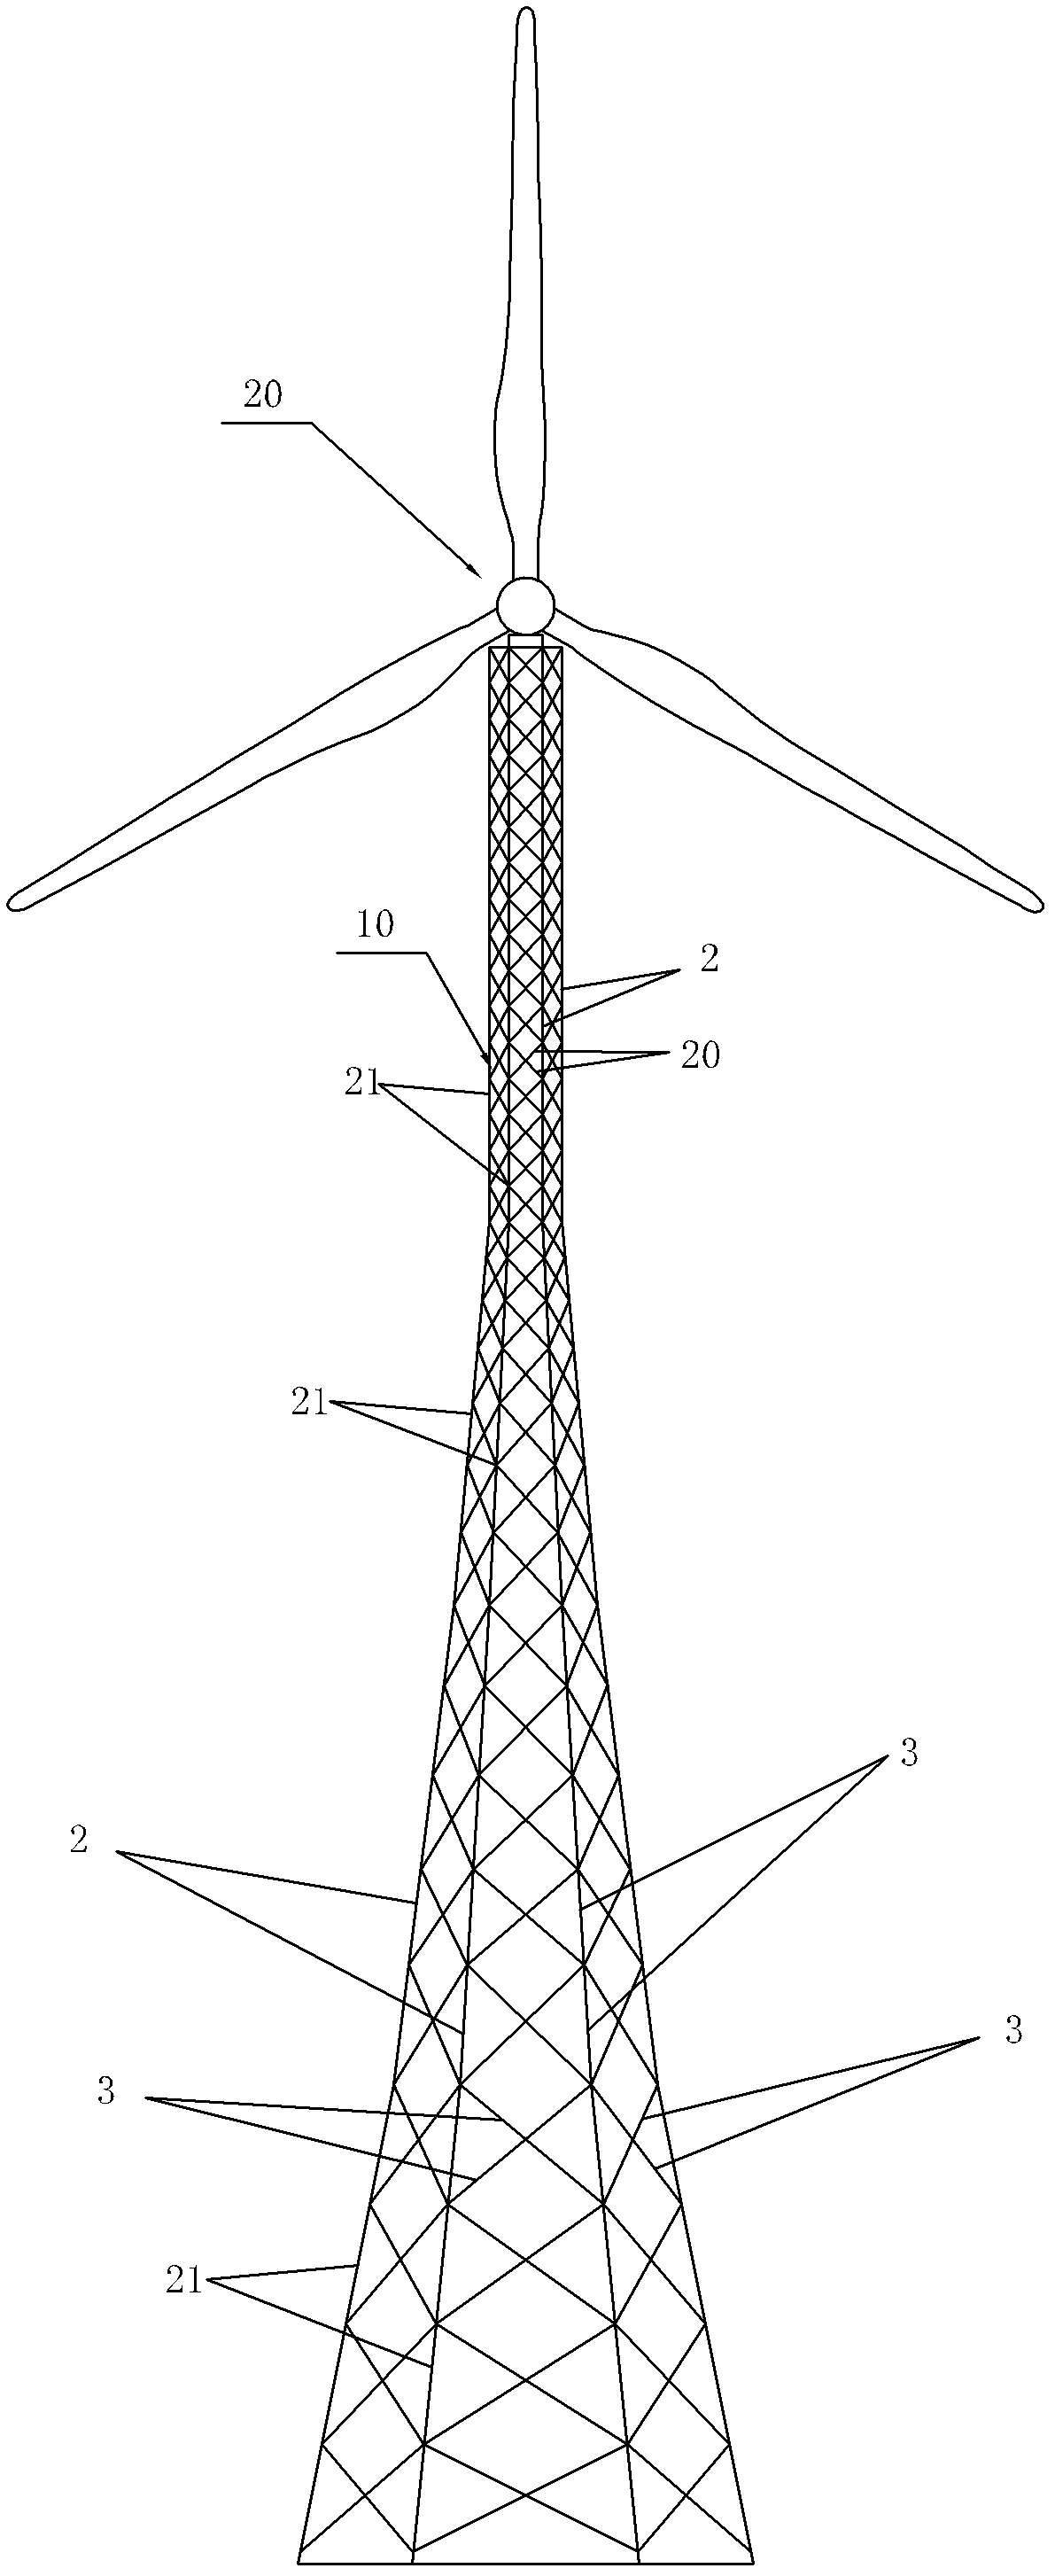 Hexagonal tower structure of wind driven generator